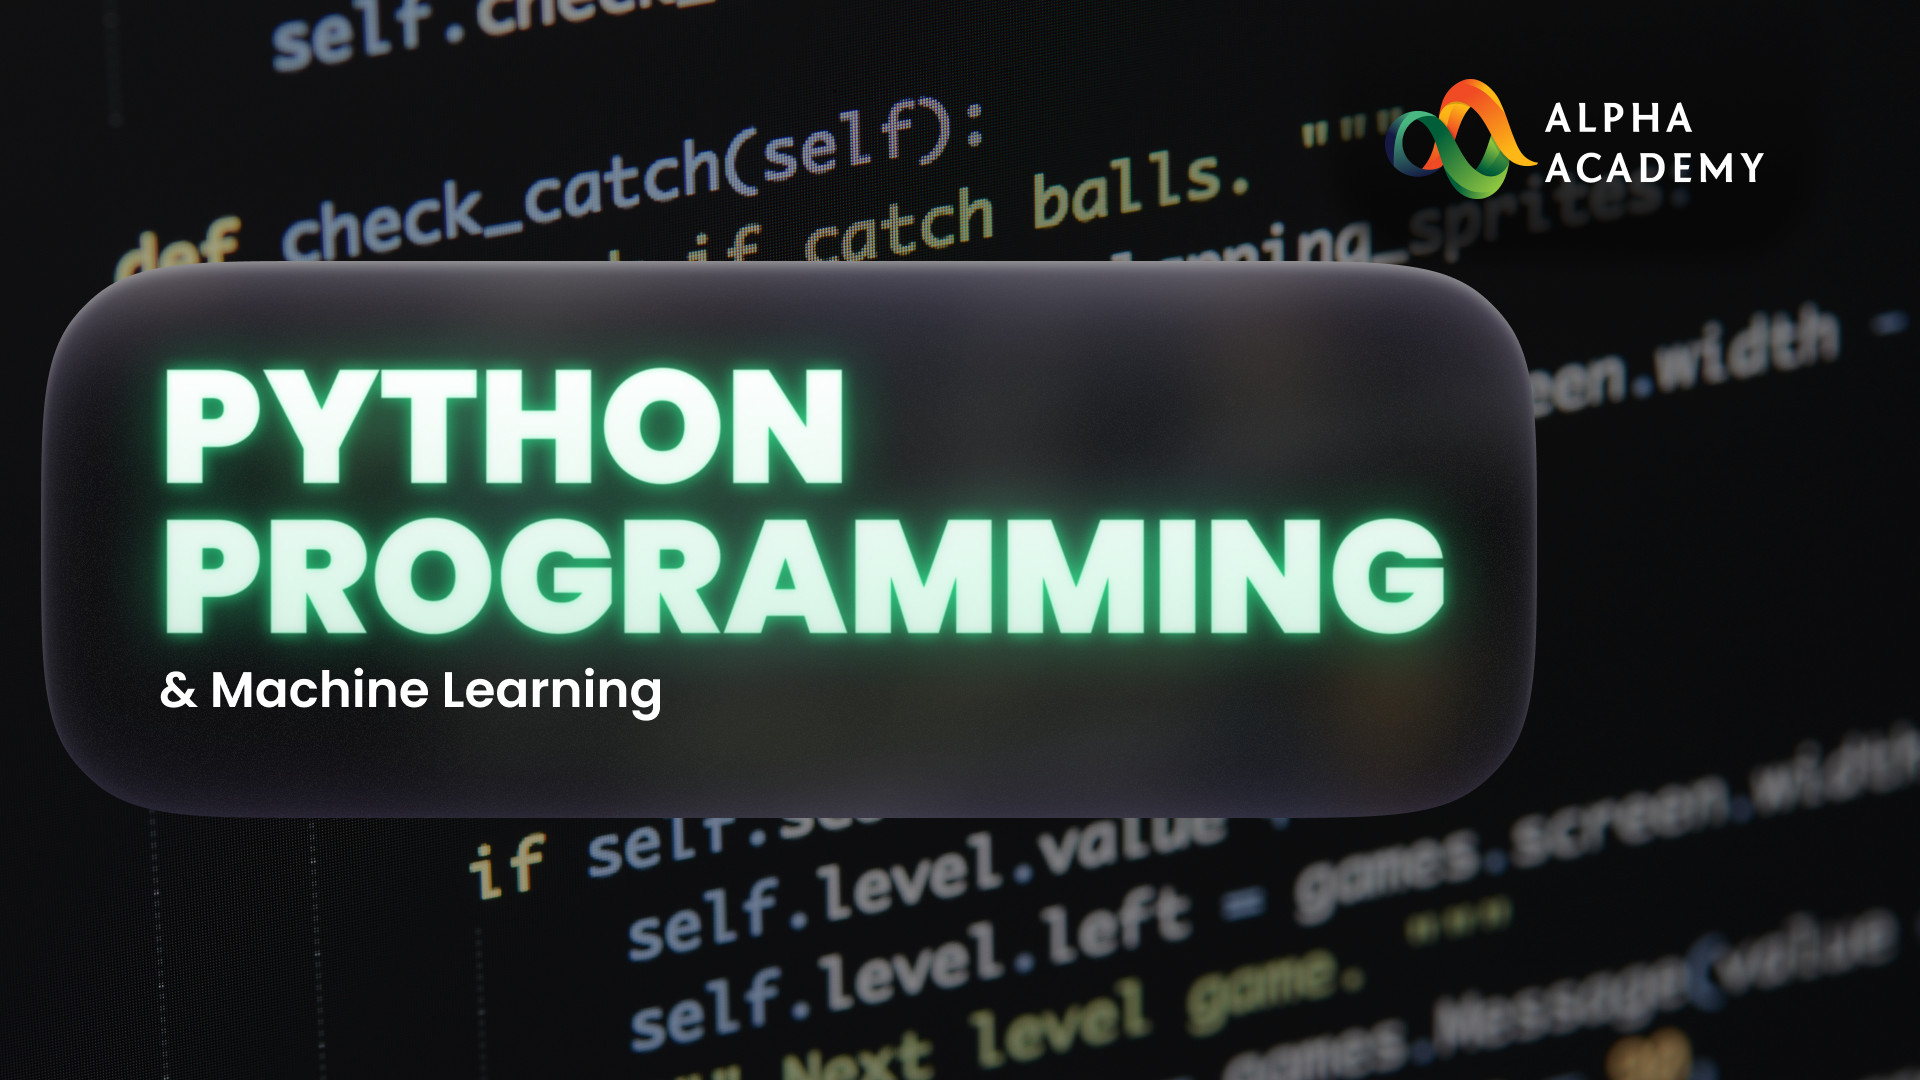 Python Programming & Machine Learning Alpha Academy Code 18.07 $